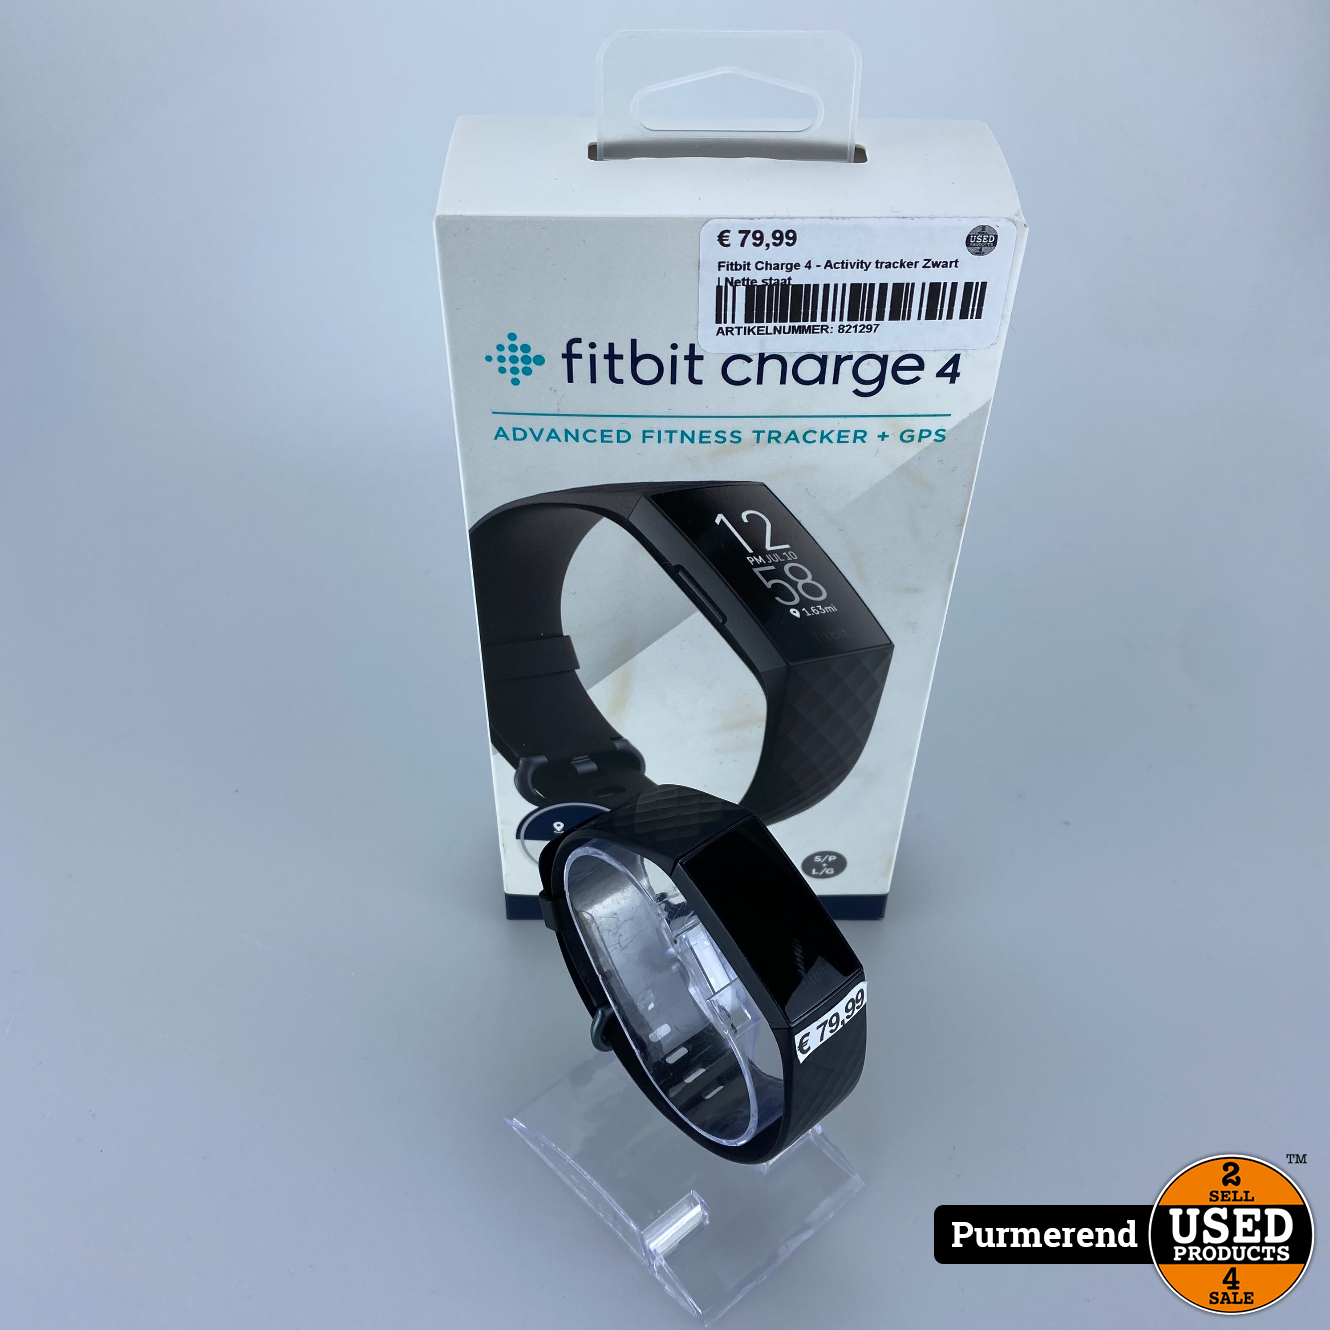 Intimidatie Algemeen Walging Fitbit Charge 4 - Activity tracker Zwart | Nette staat - Used Products  Purmerend